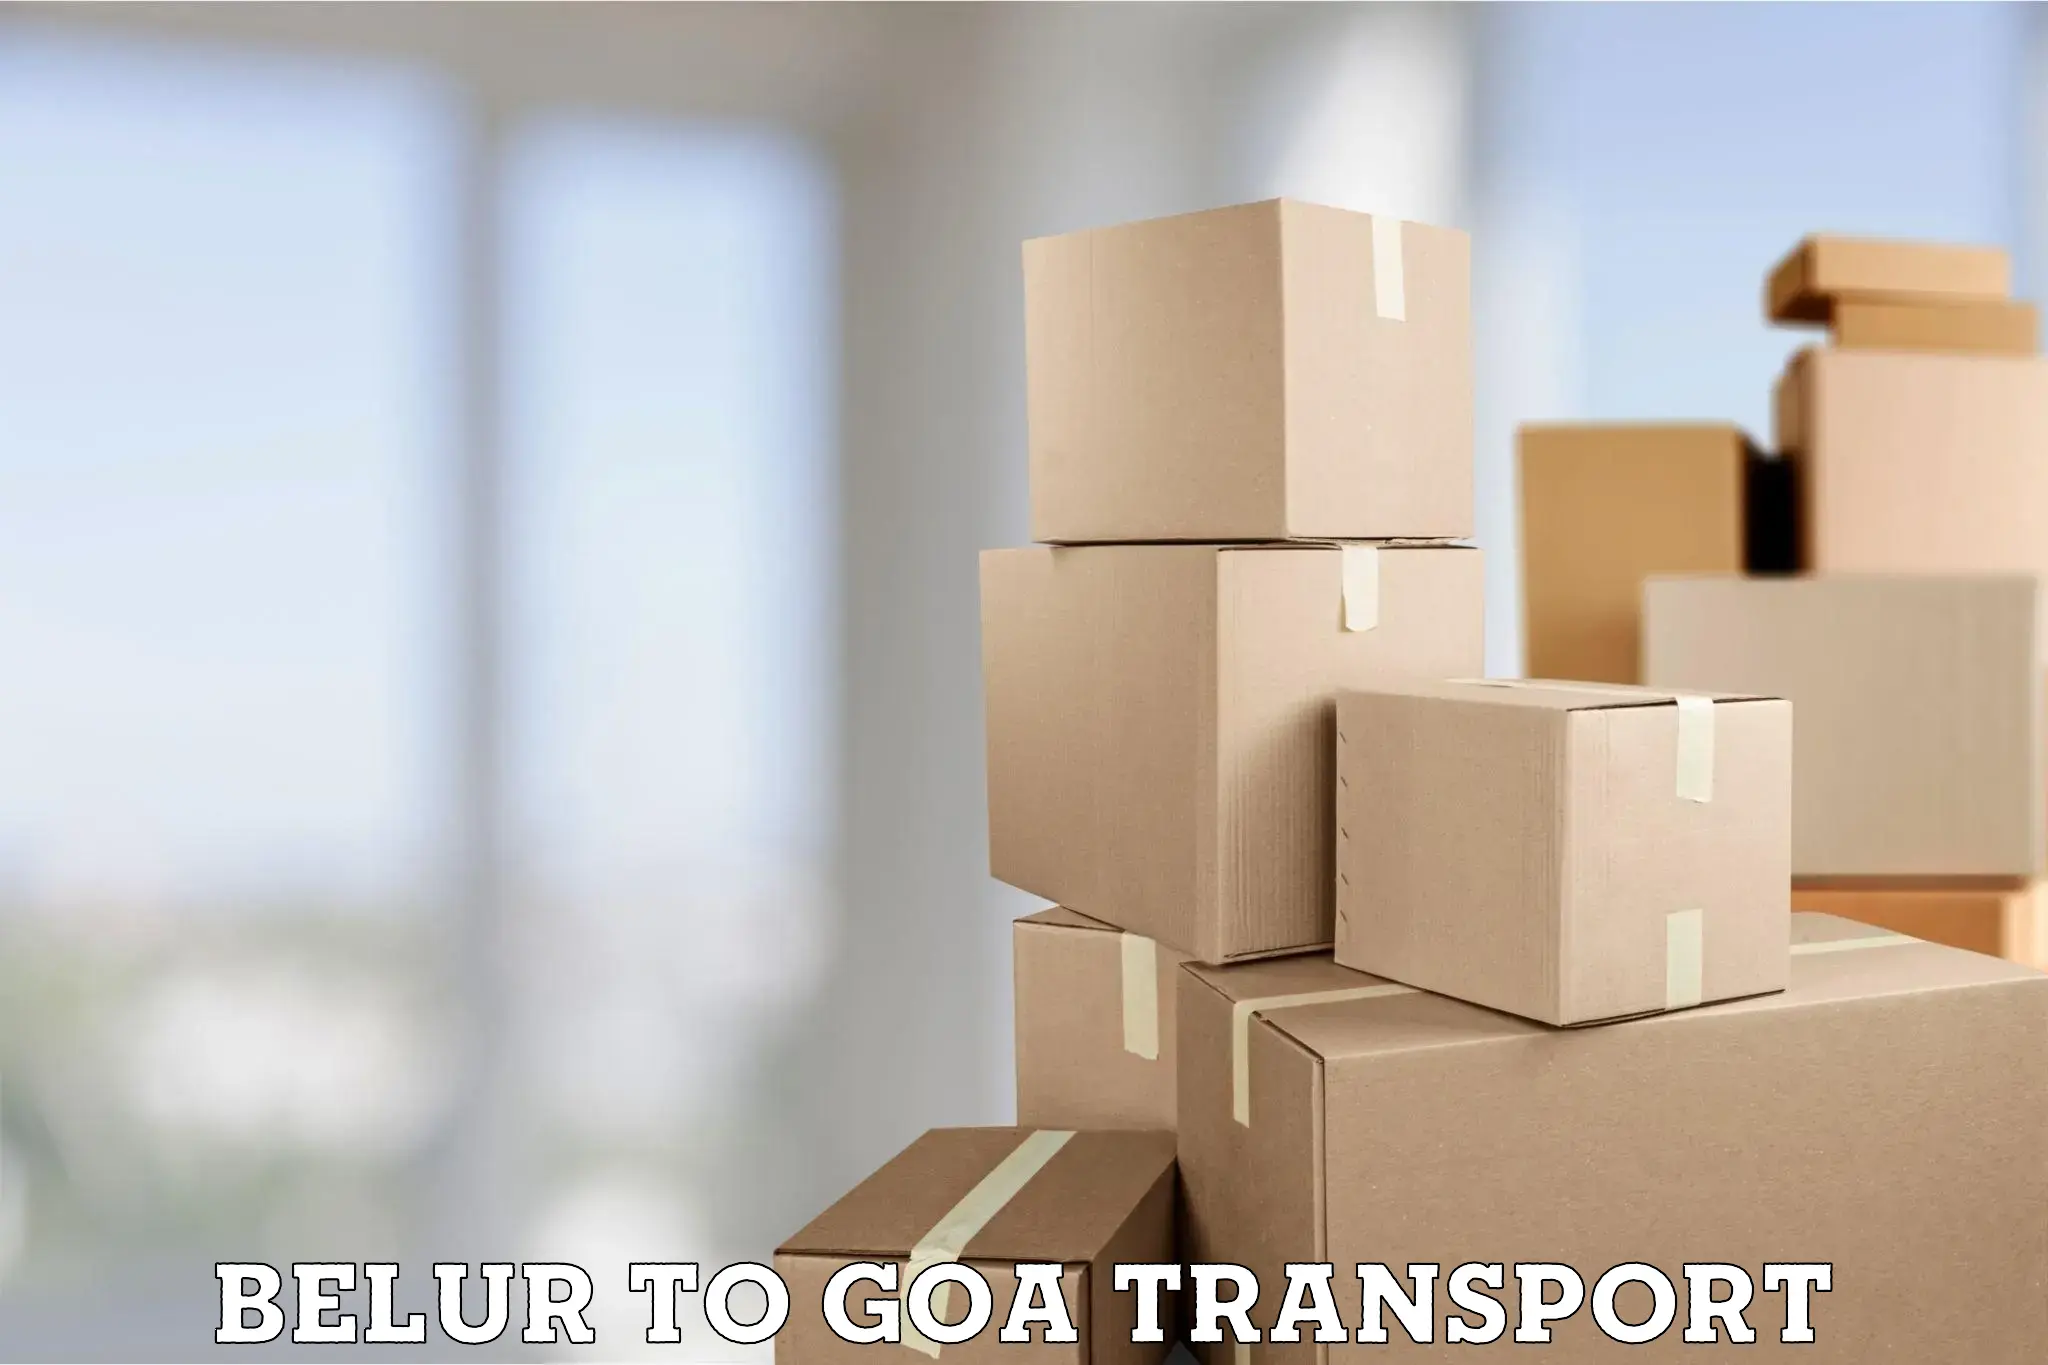 Daily transport service Belur to IIT Goa